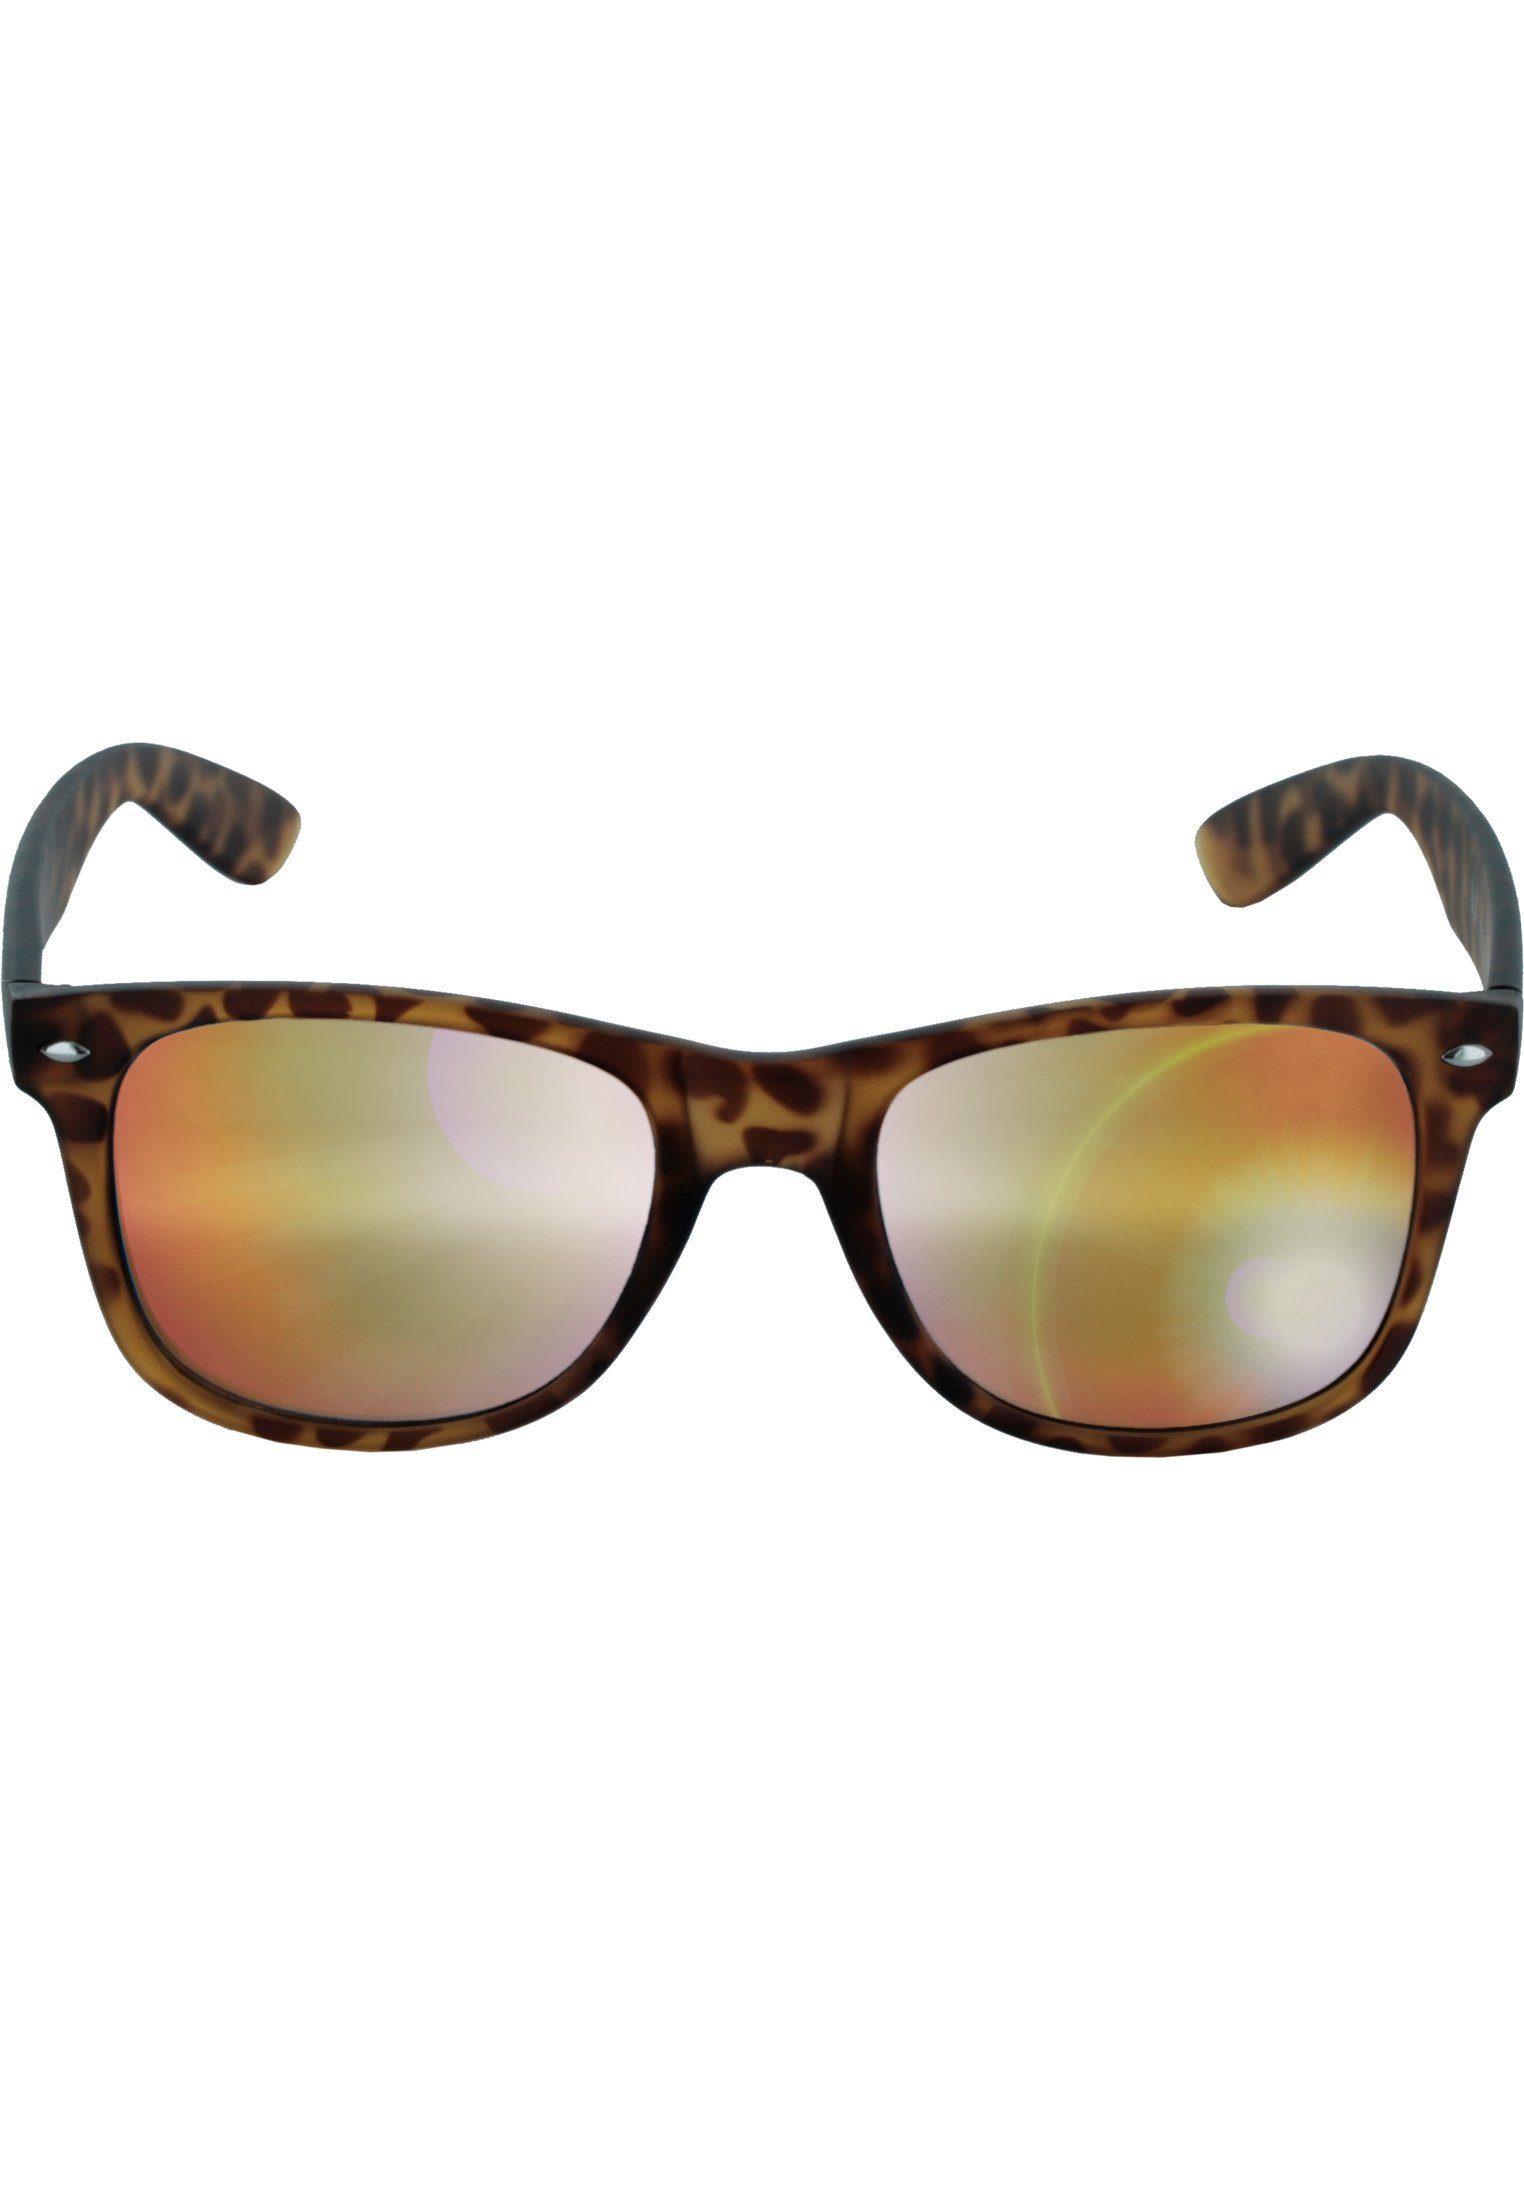 MSTRDS Sonnenbrille Accessoires Likoma Sunglasses amber/orange Mirror